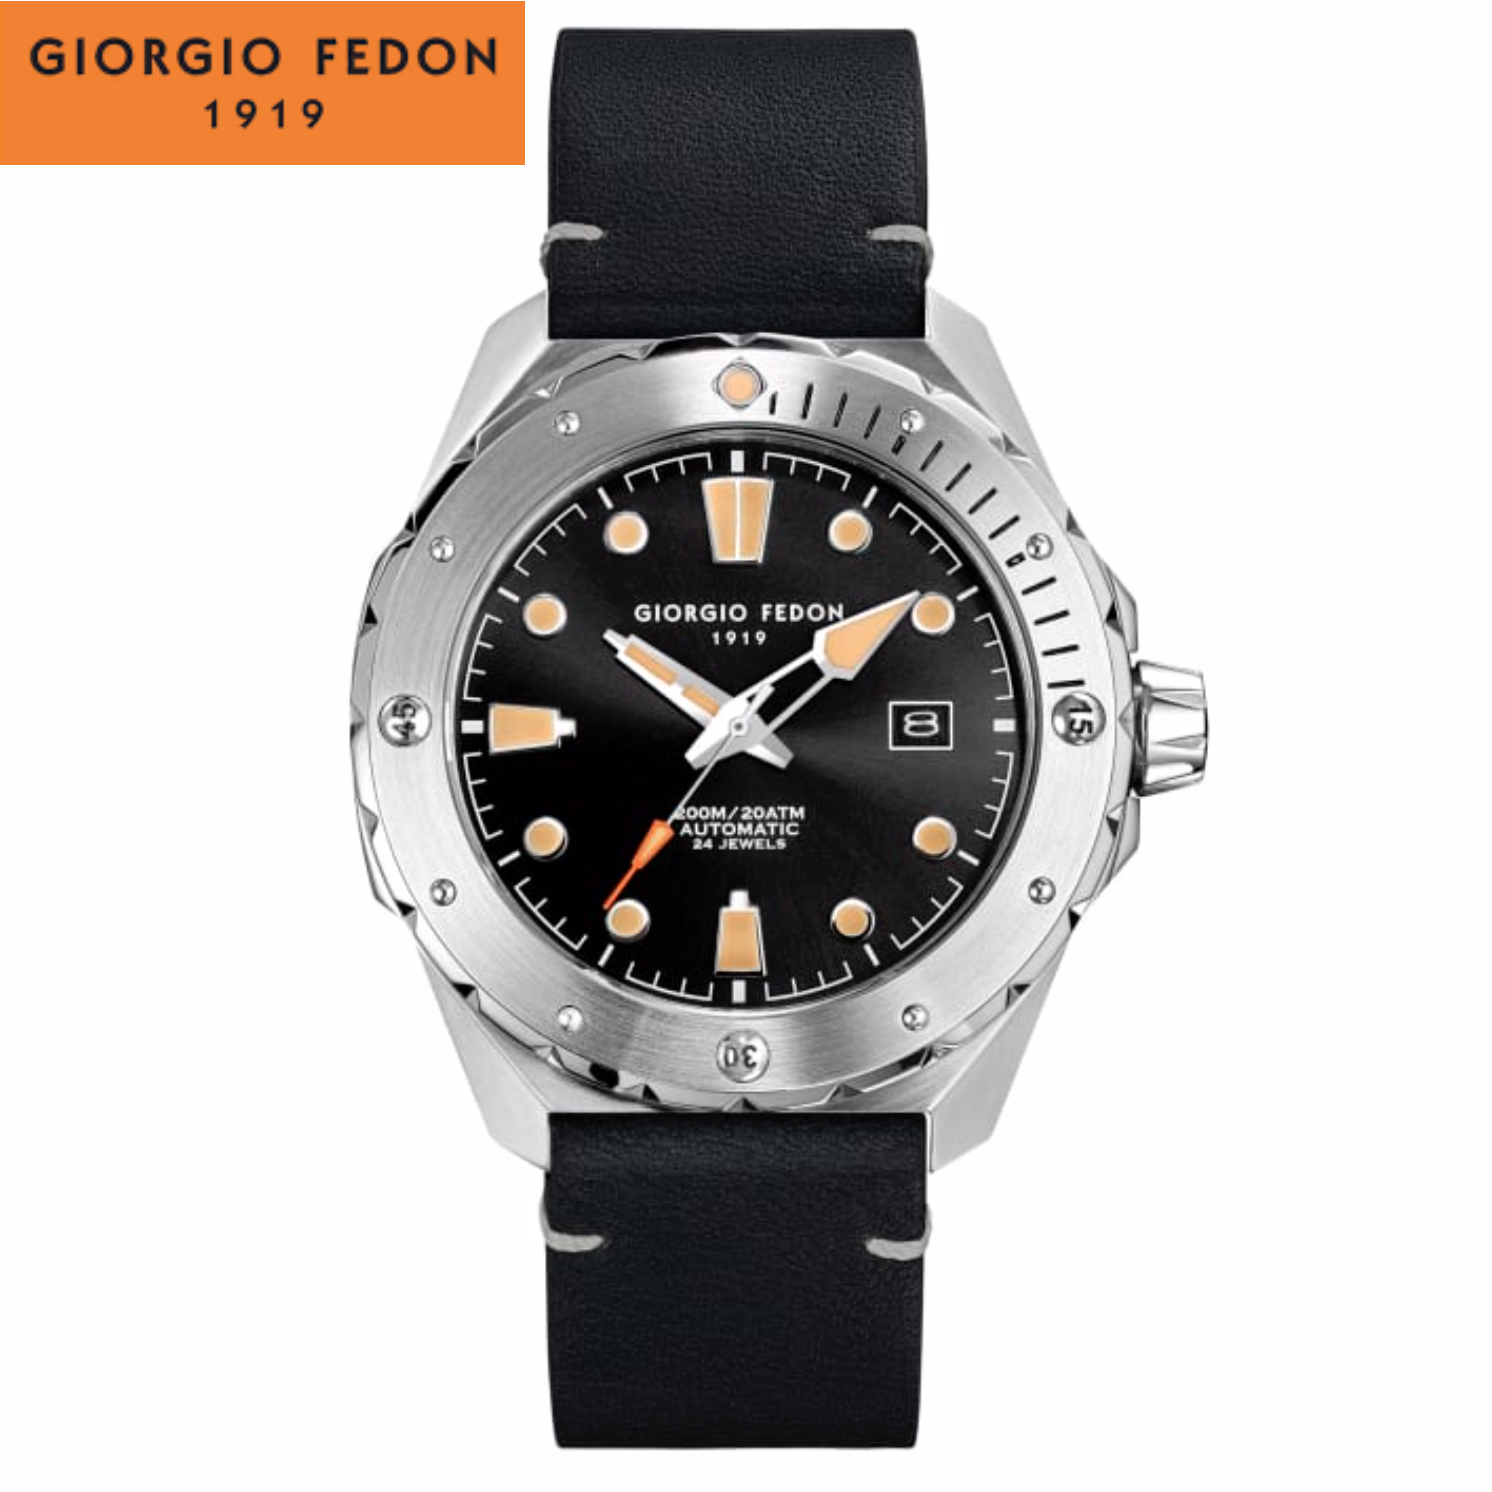 Giorgio Fedon 喬治菲登1919 Ocean Walker  海行者系列 機械腕錶 GFCJ001黑/45mm